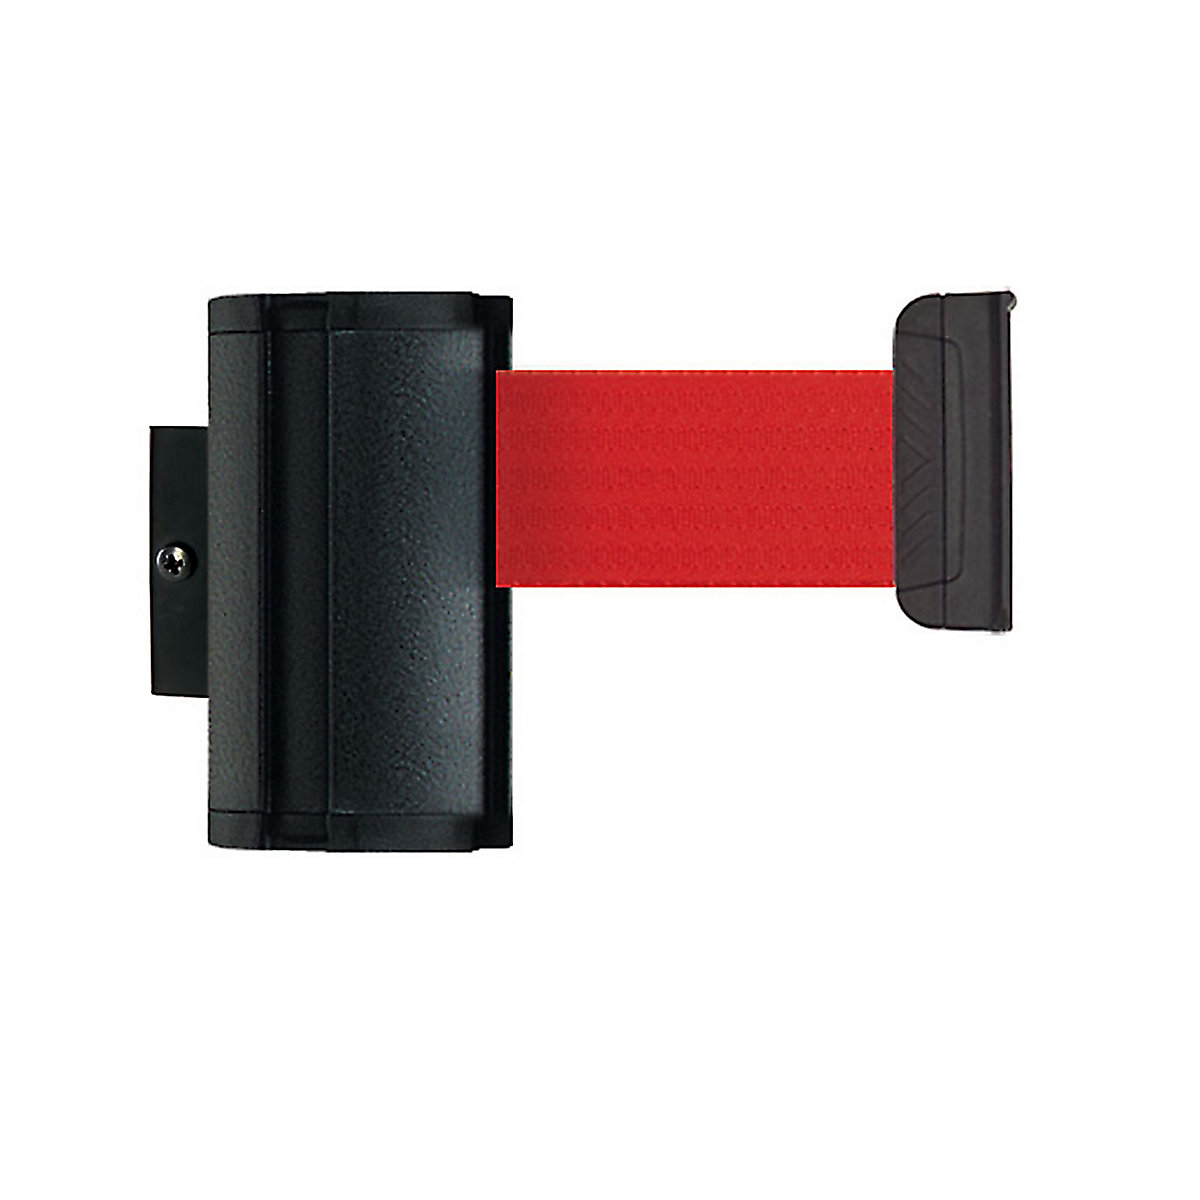 Bandcassette Wall Mount, uittreklengte max. 2300 mm, bandkleur rood